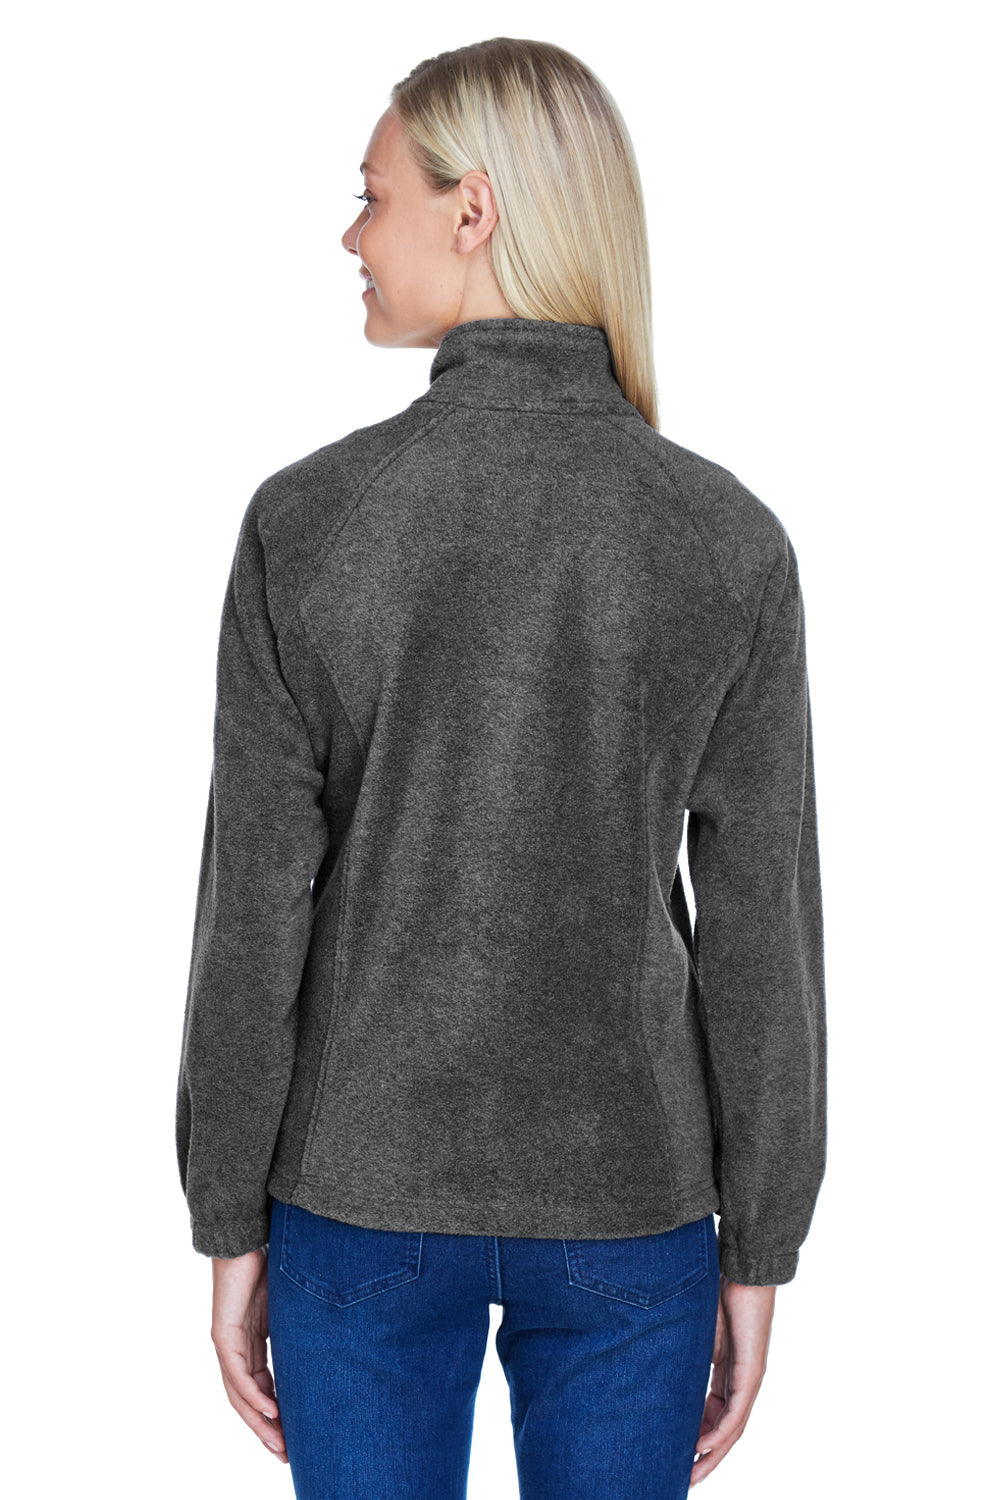 Harriton M990W Womens Full Zip Fleece Jacket Charcoal Grey Back